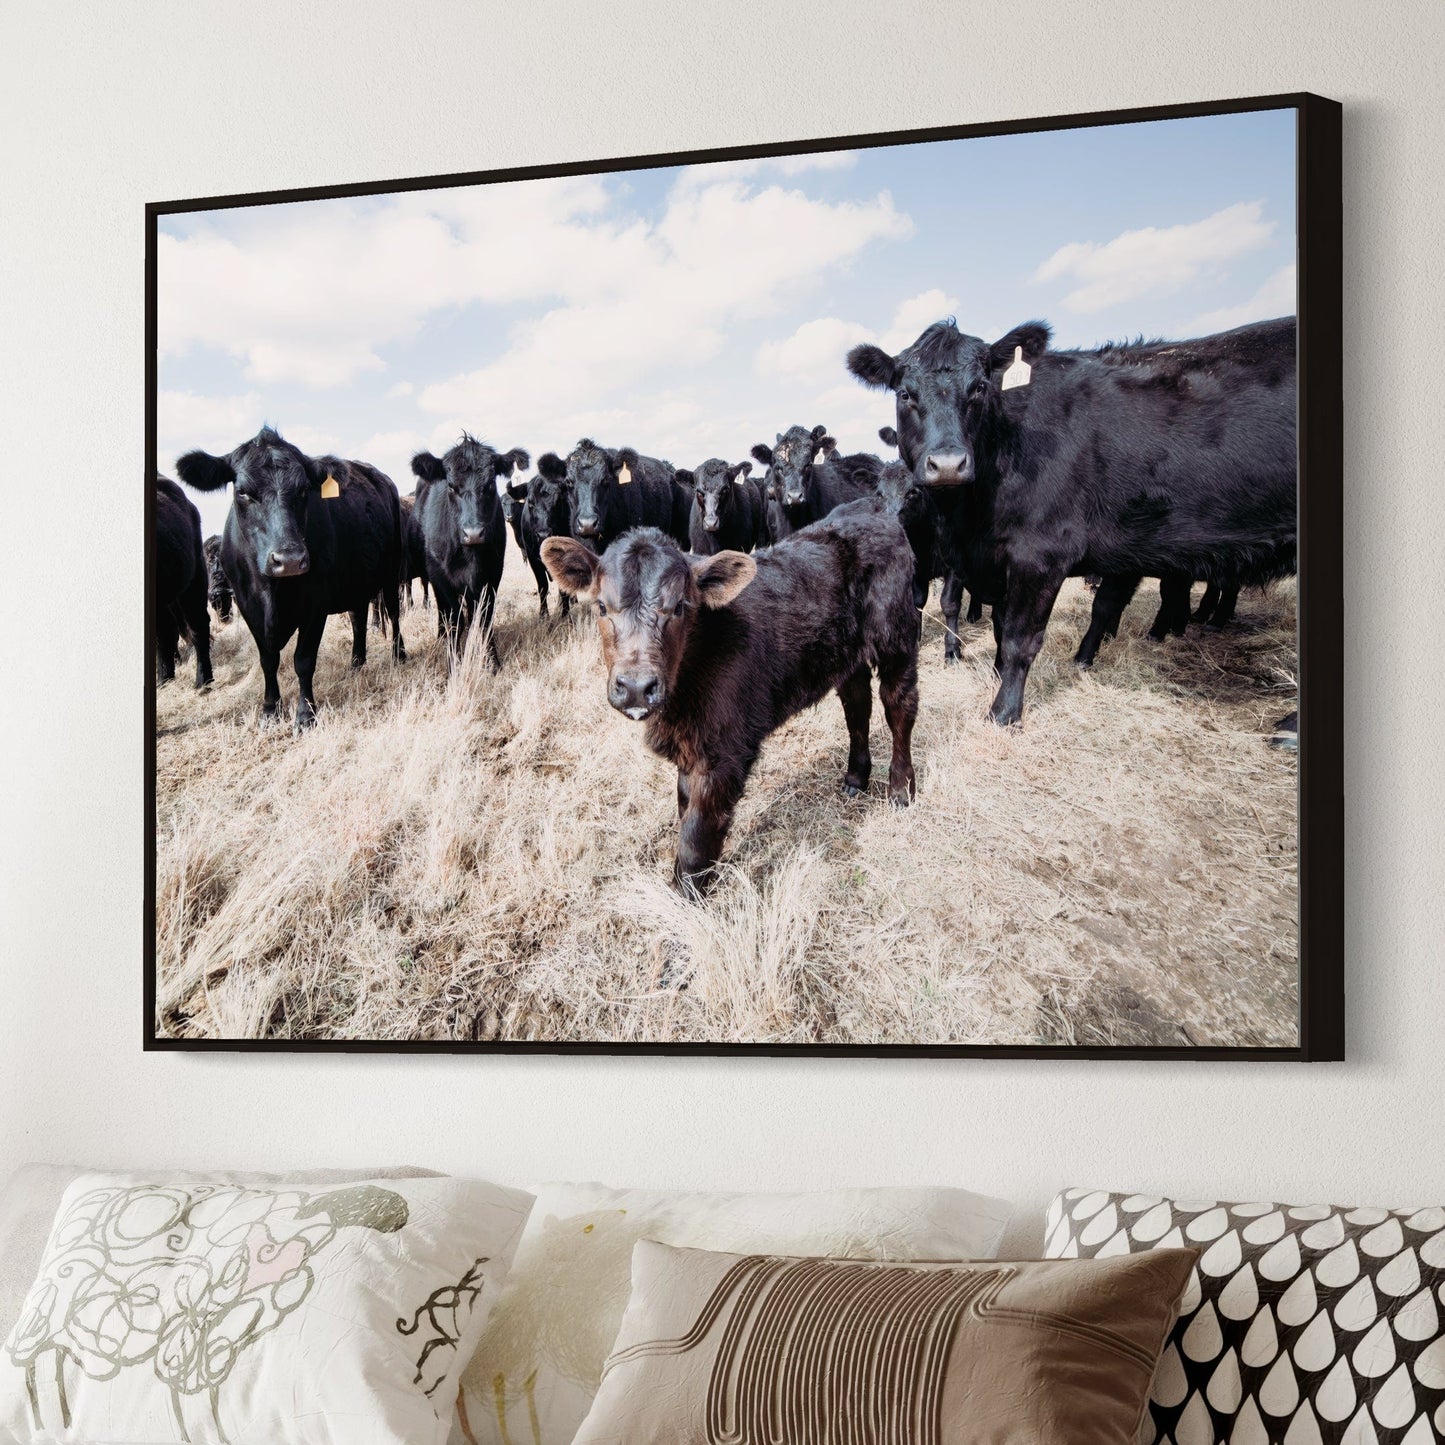 Ranch Style Decor Wall Art - Black Angus Cattle Wall Art Teri James Photography